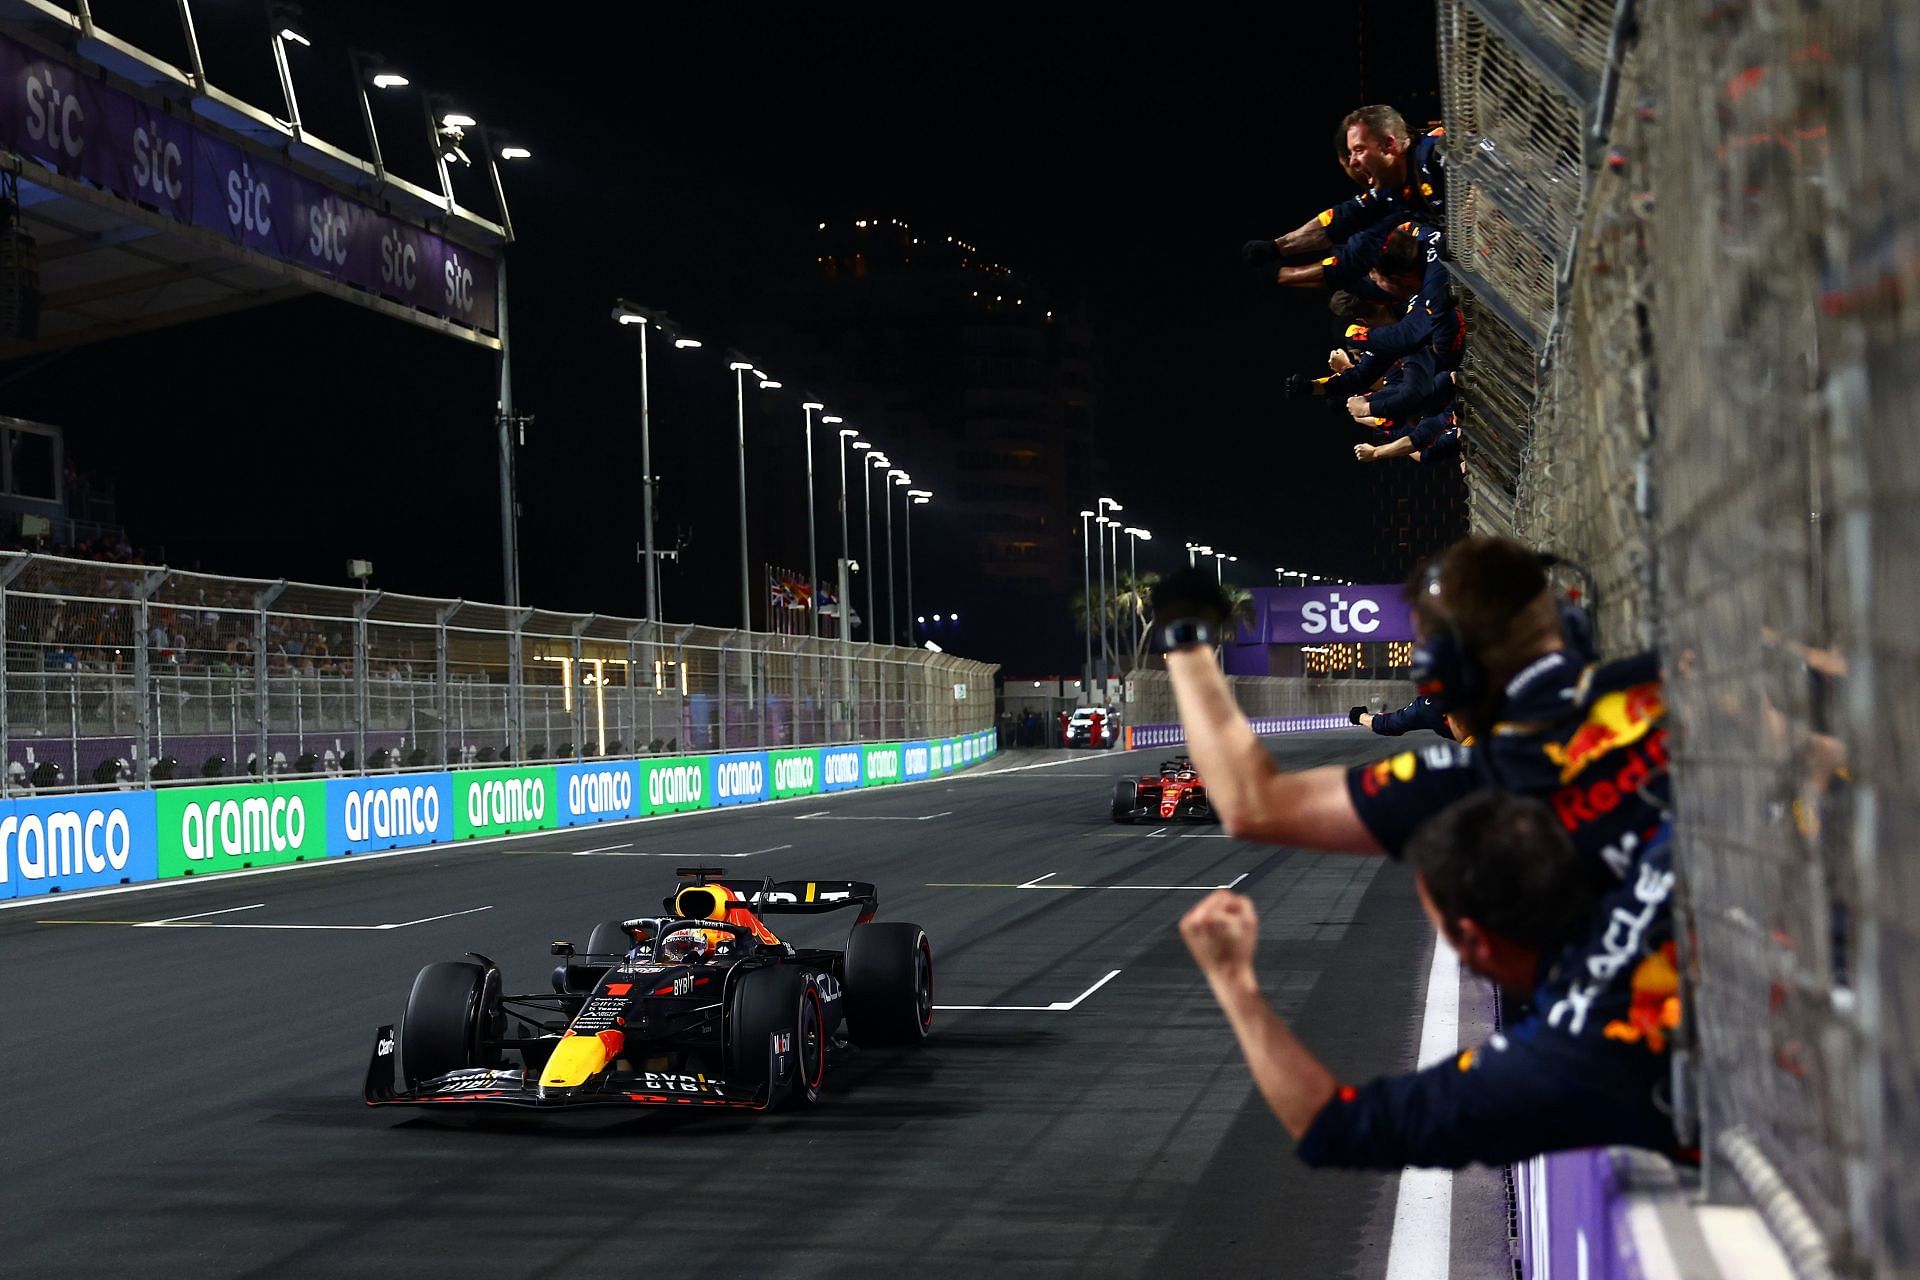 Max Verstappen beat Charles Leclerc to win the Saudi Arabian GP